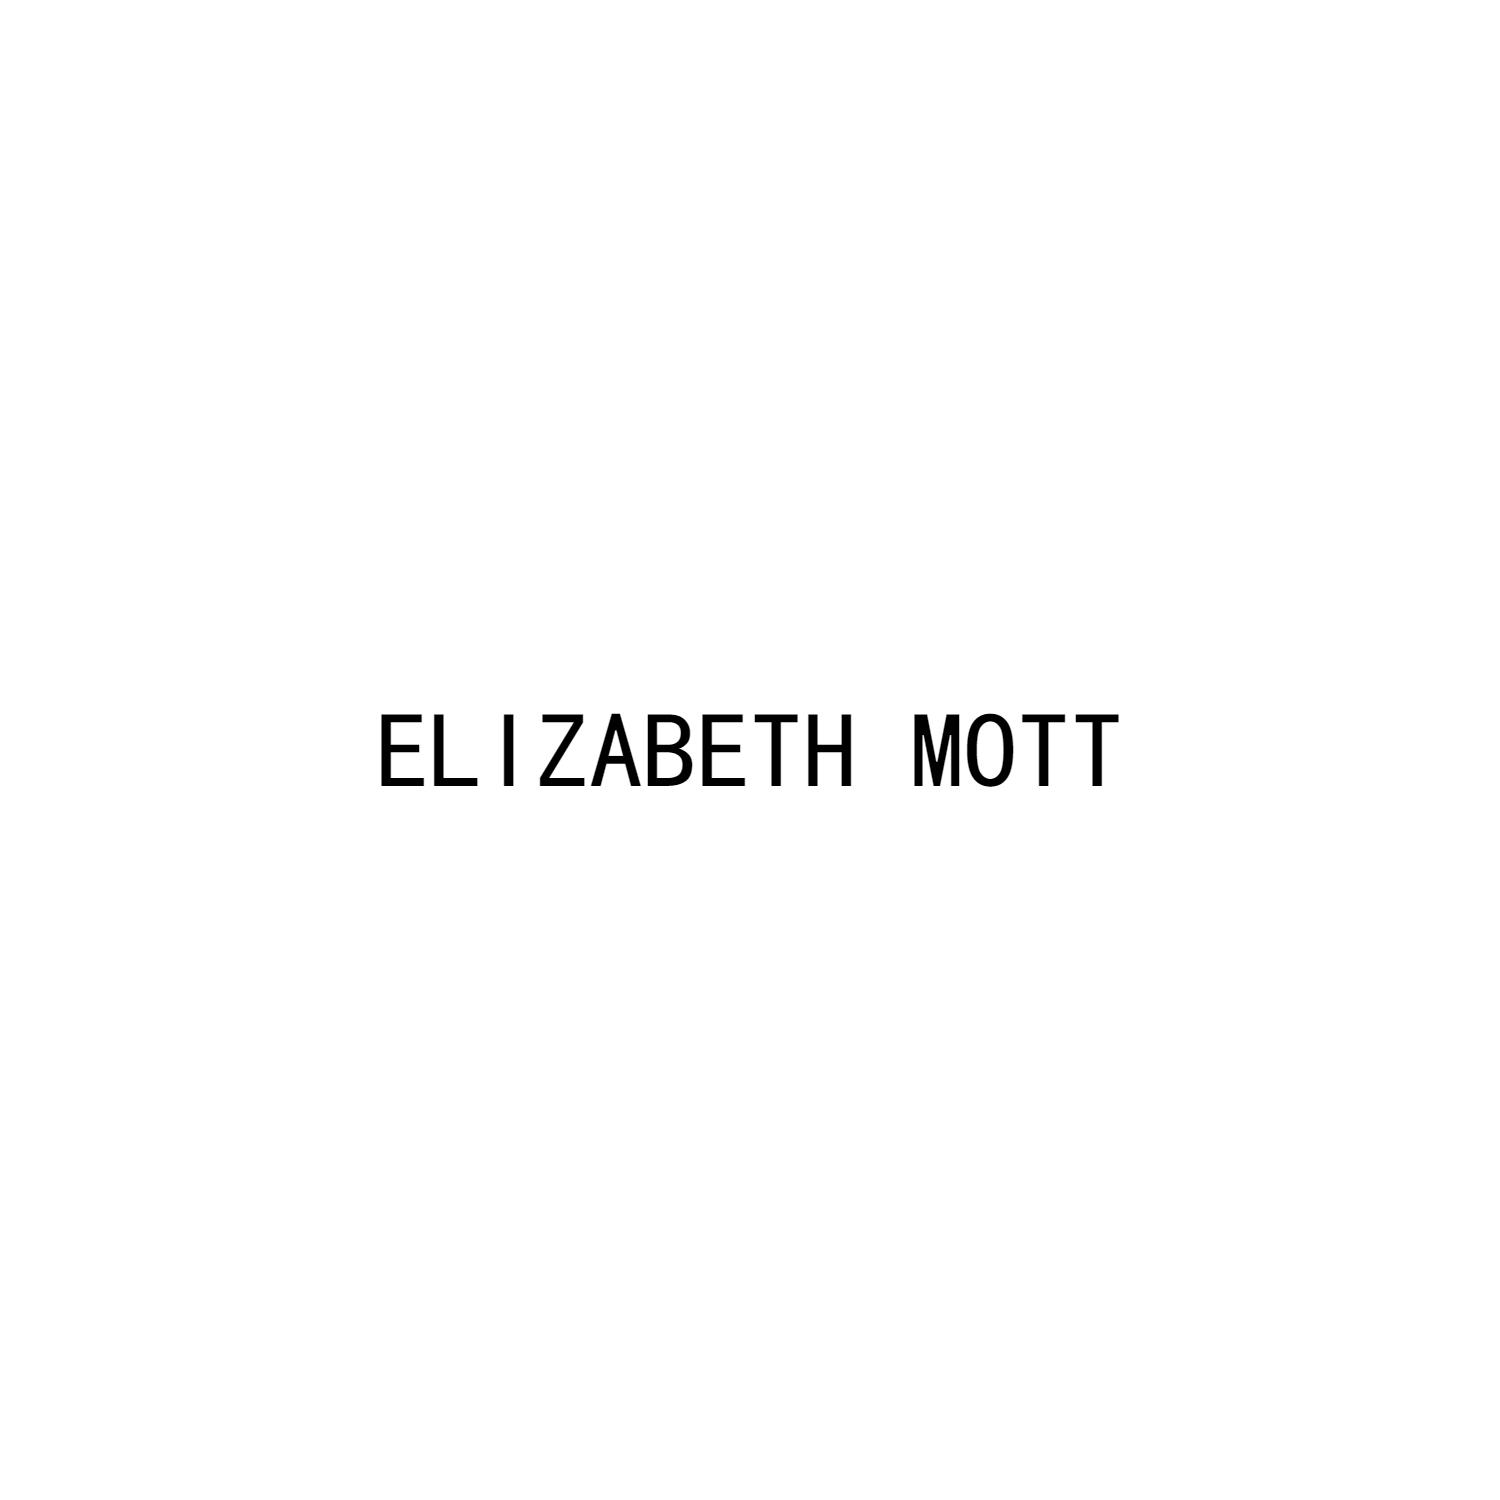 ELIZABETH MOTT